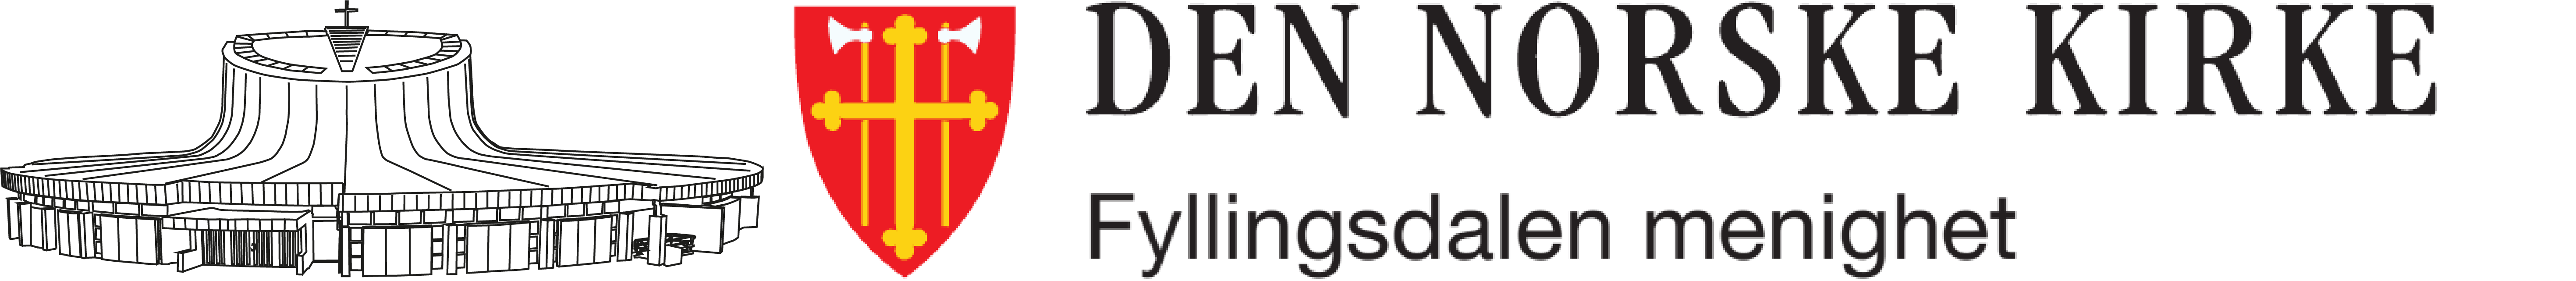 Fyllingsdalen menighet logo